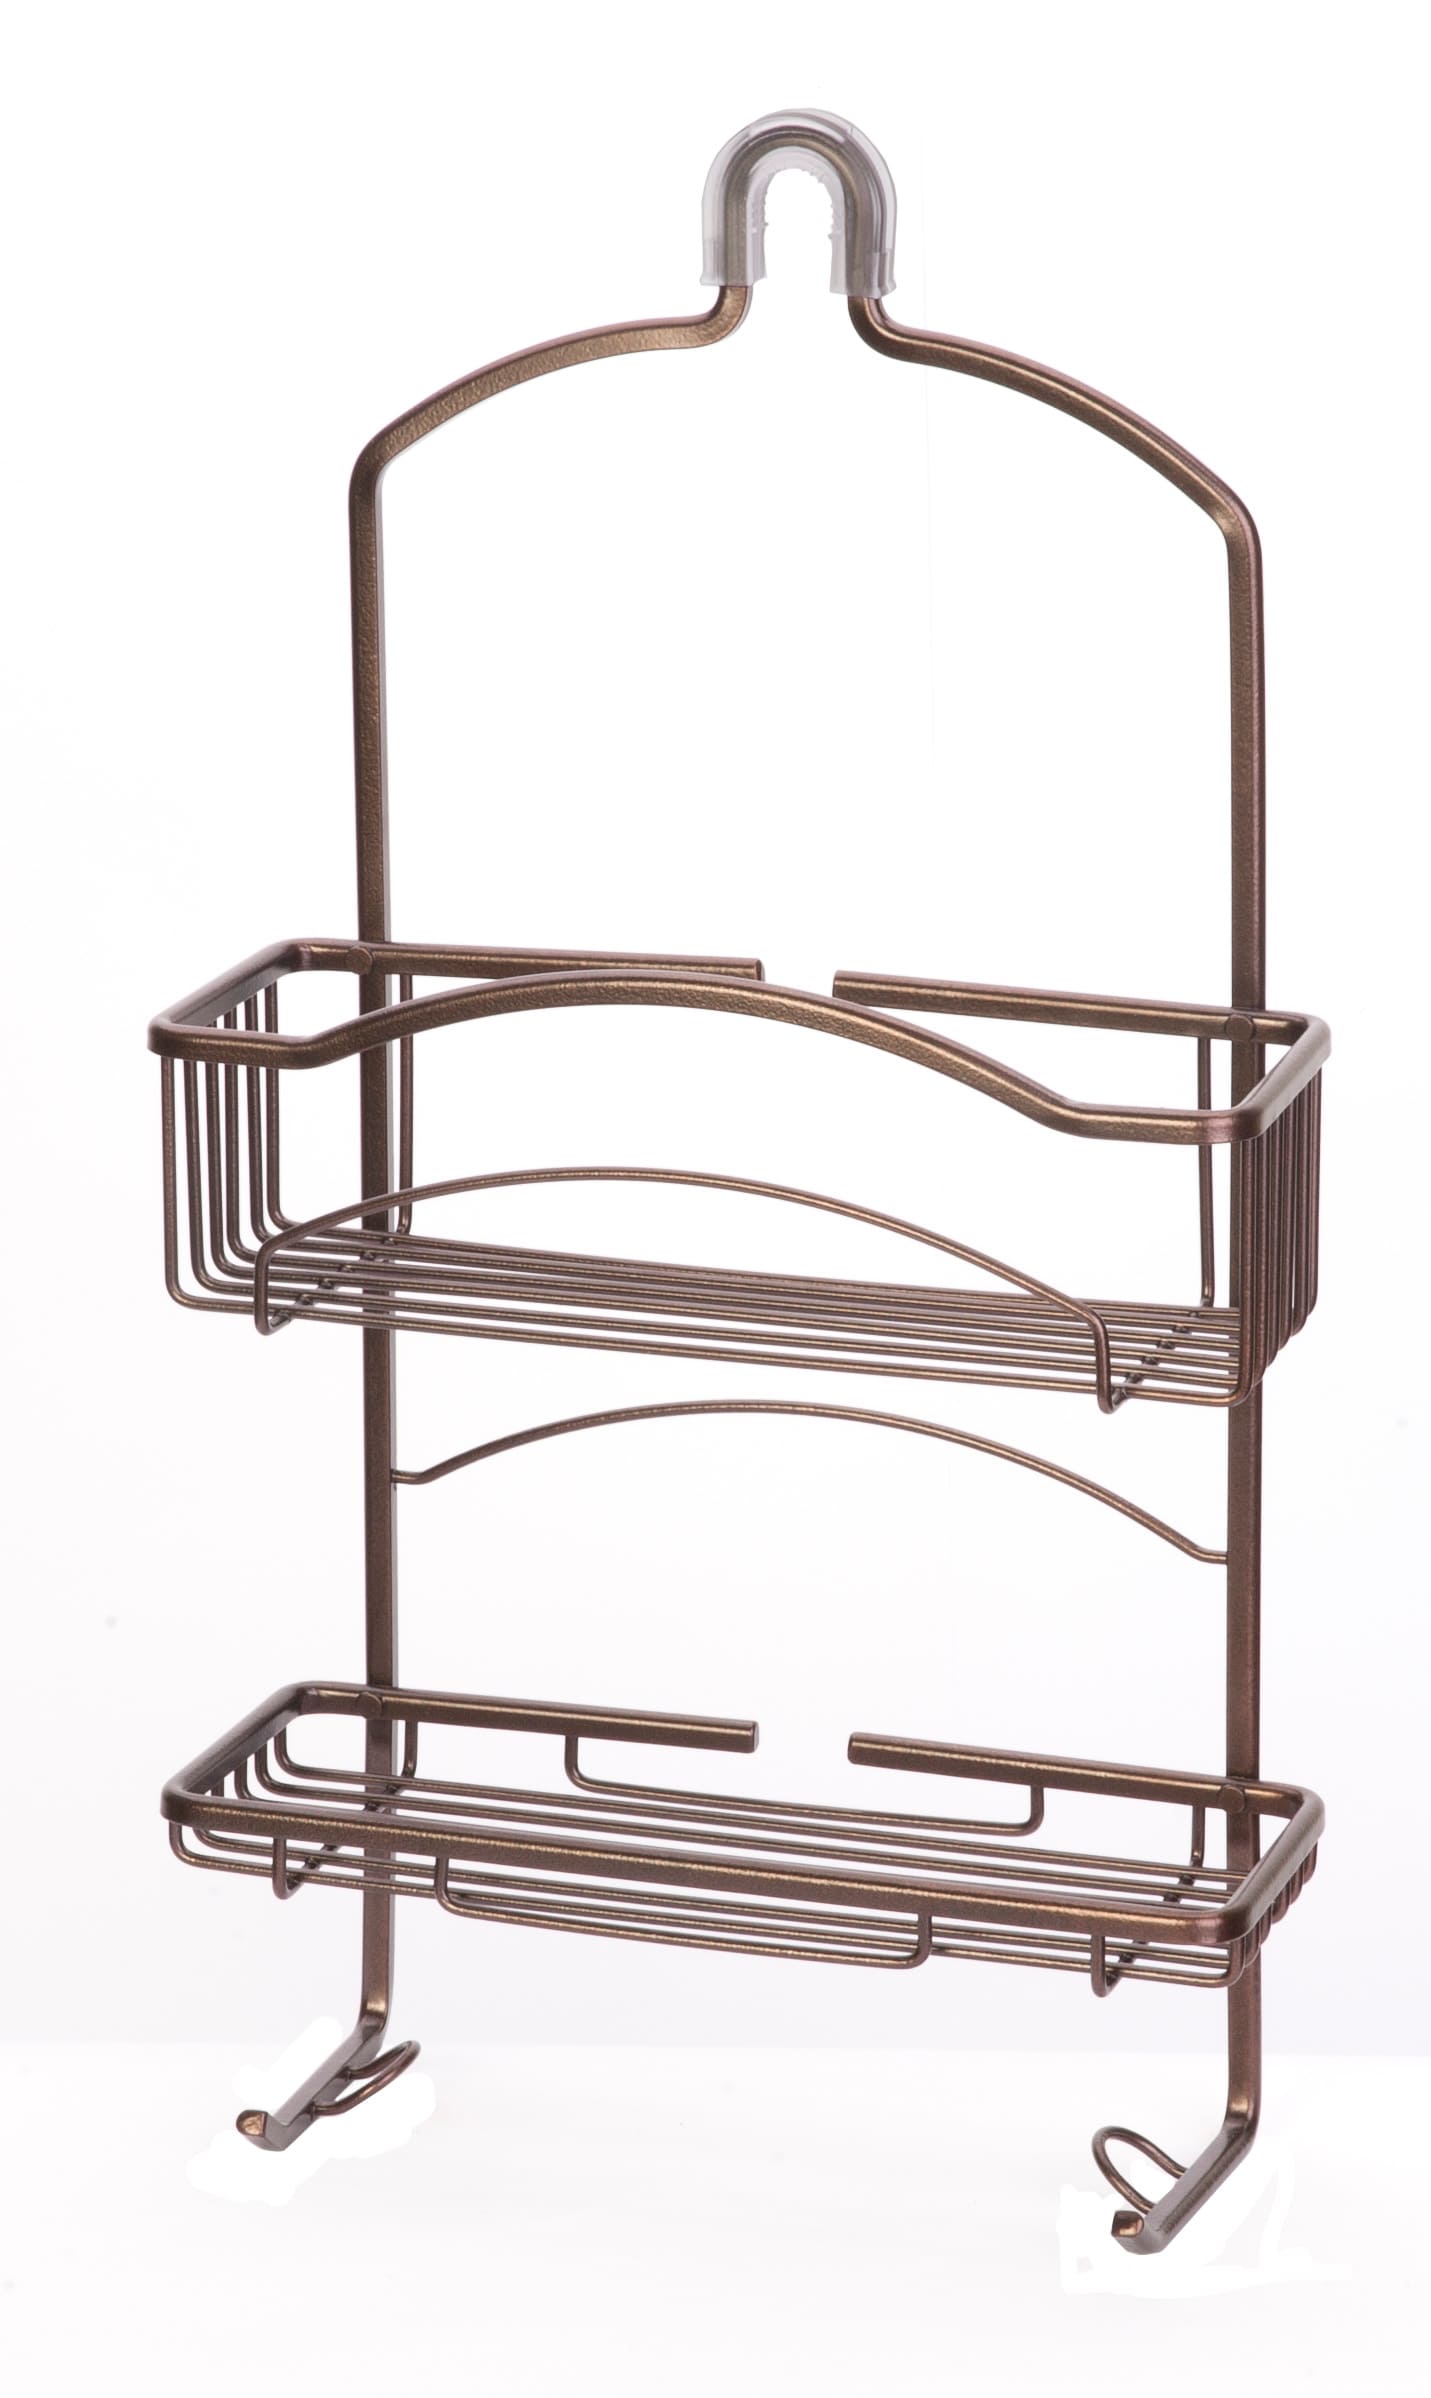 Oil Rubbed Bronze Aluminum 2-Shelf Hanging Shower Caddy 21-in x